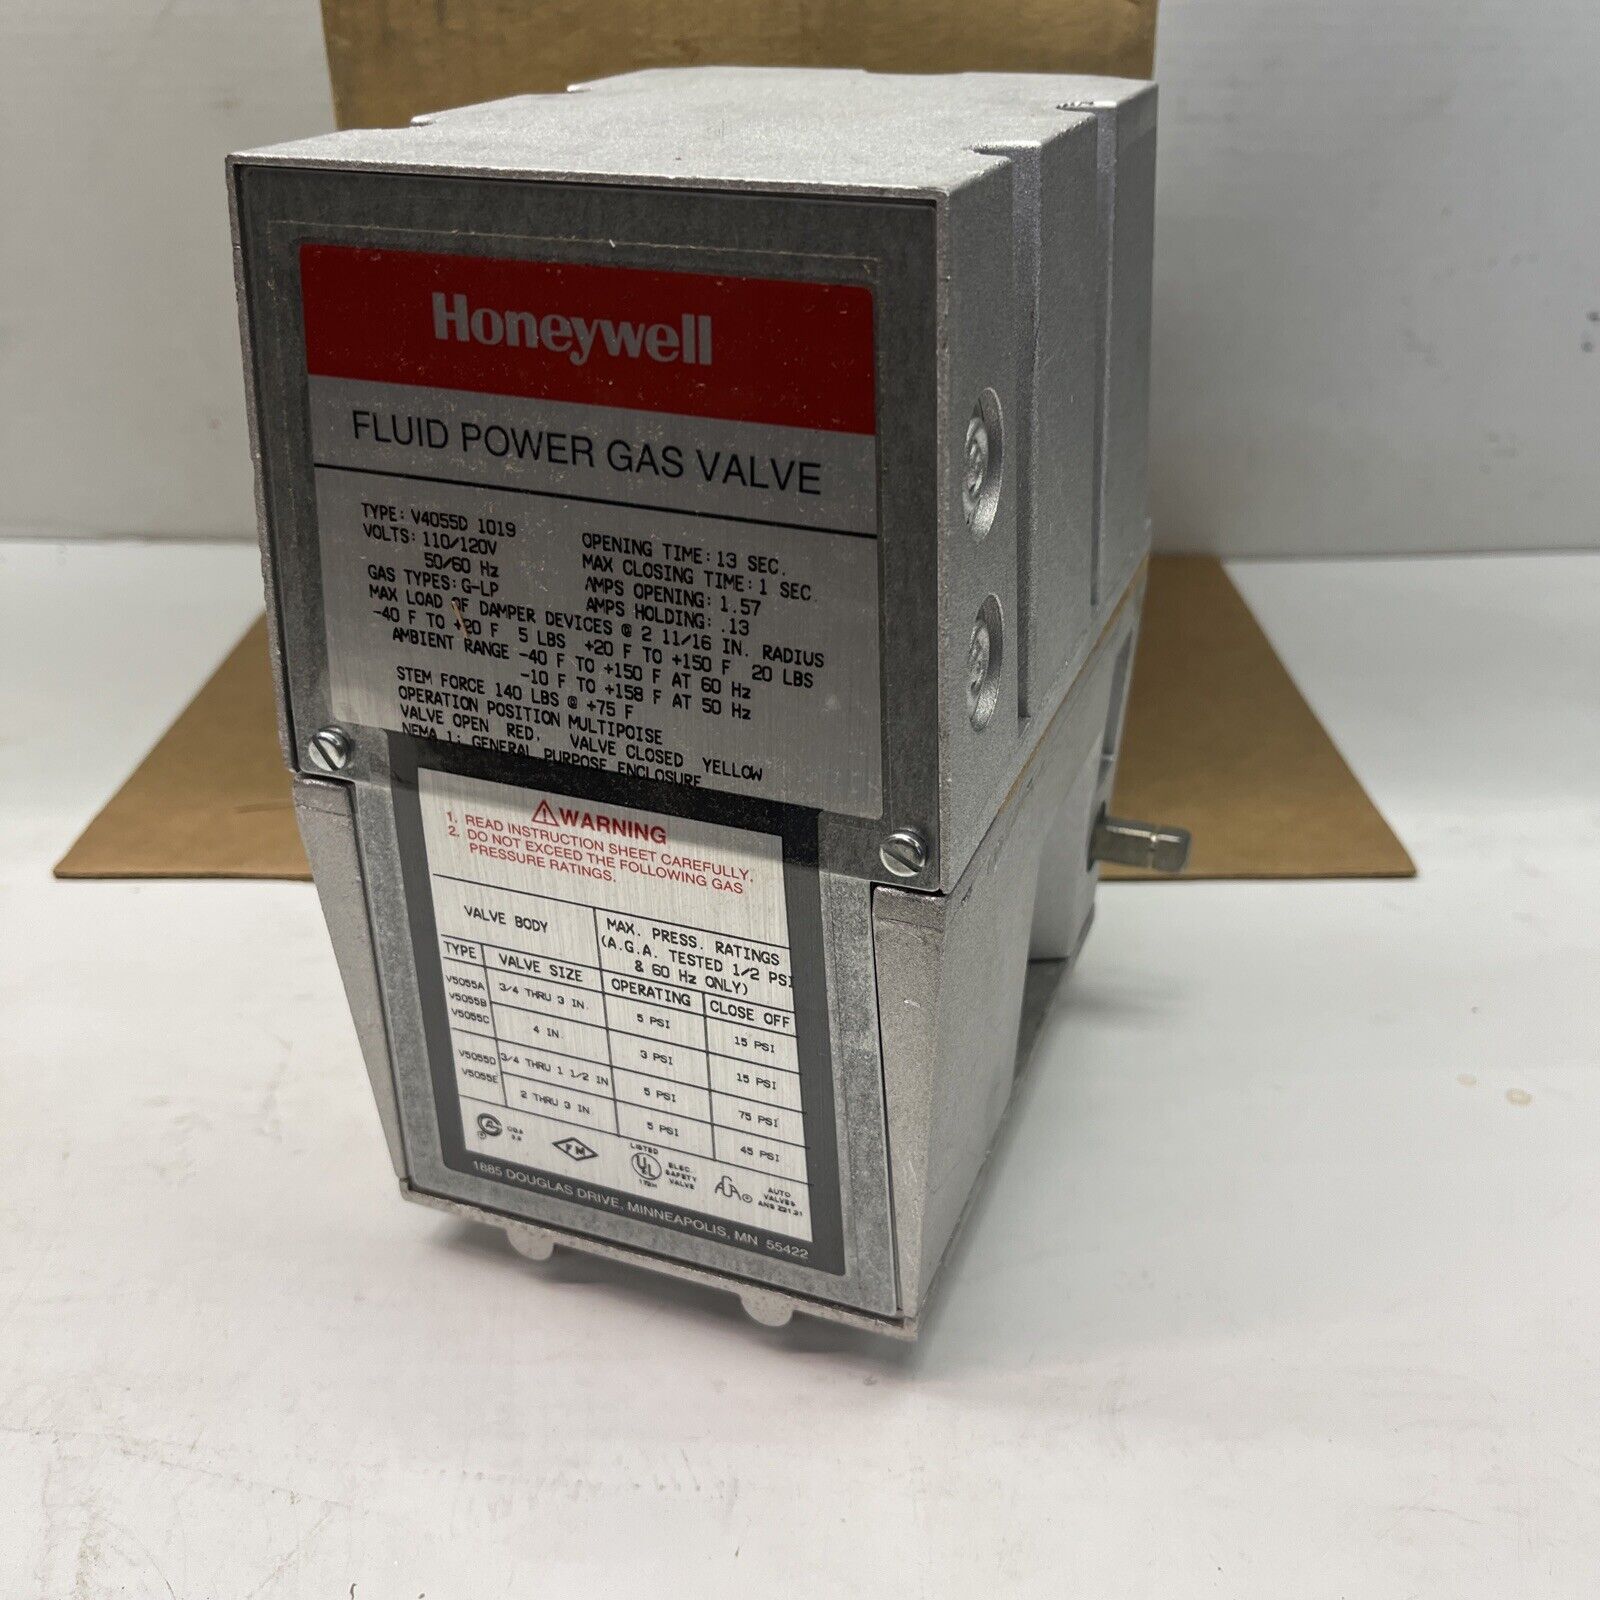 (NEW) Honeywell On-Off Fluid Power Gas Valve Actuator V4055D1019 (V4055D-1019)